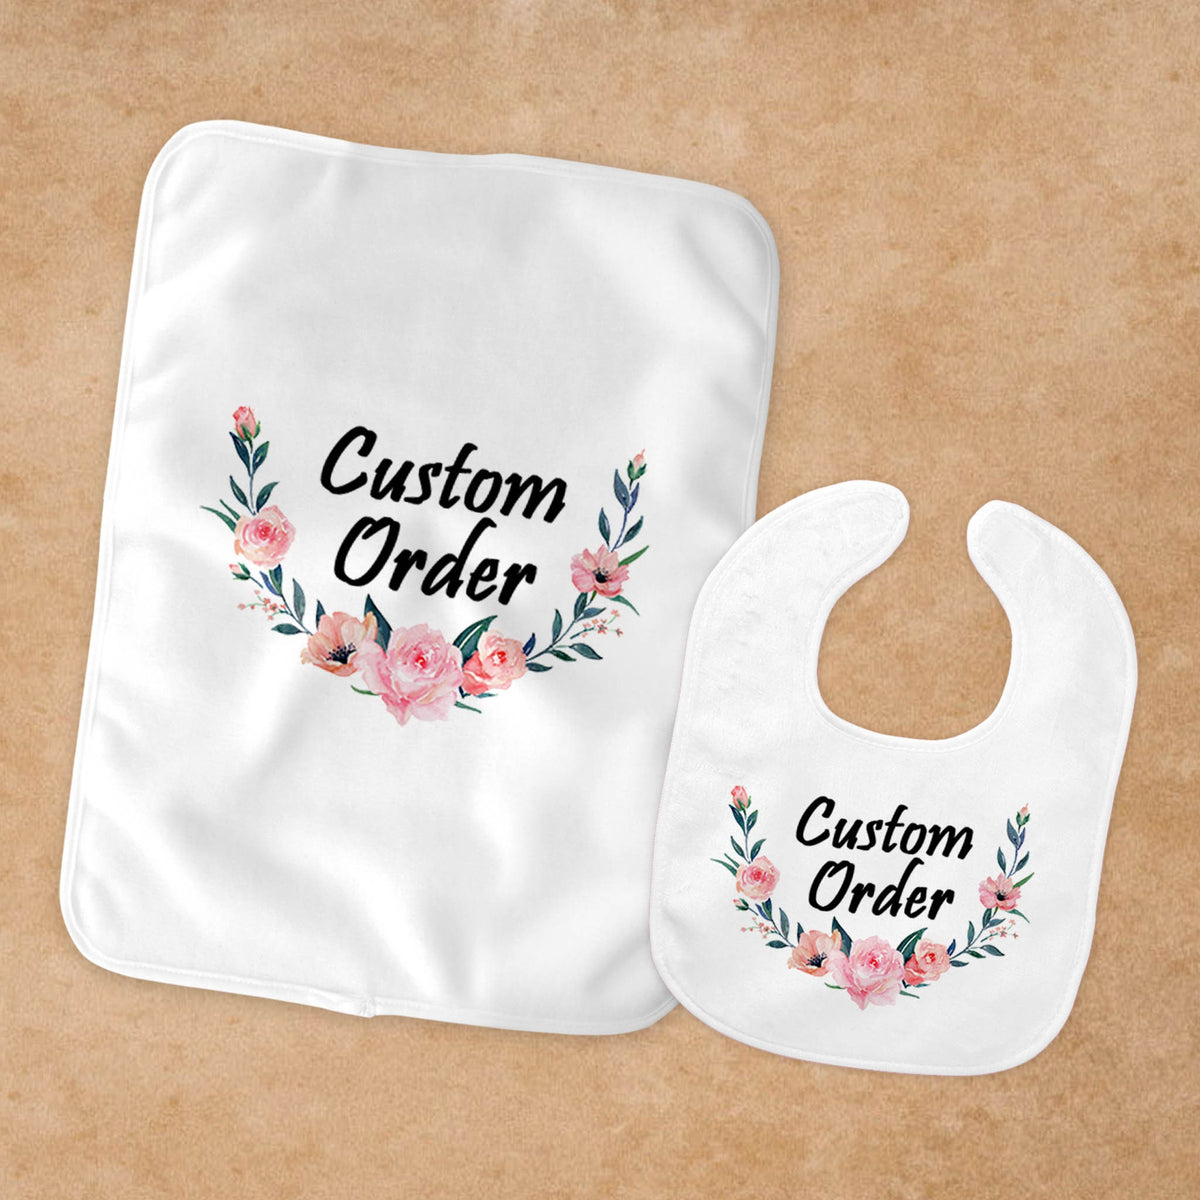 Personalized Burp Cloth | Custom Baby Gifts | Baby Shower | Custom Order